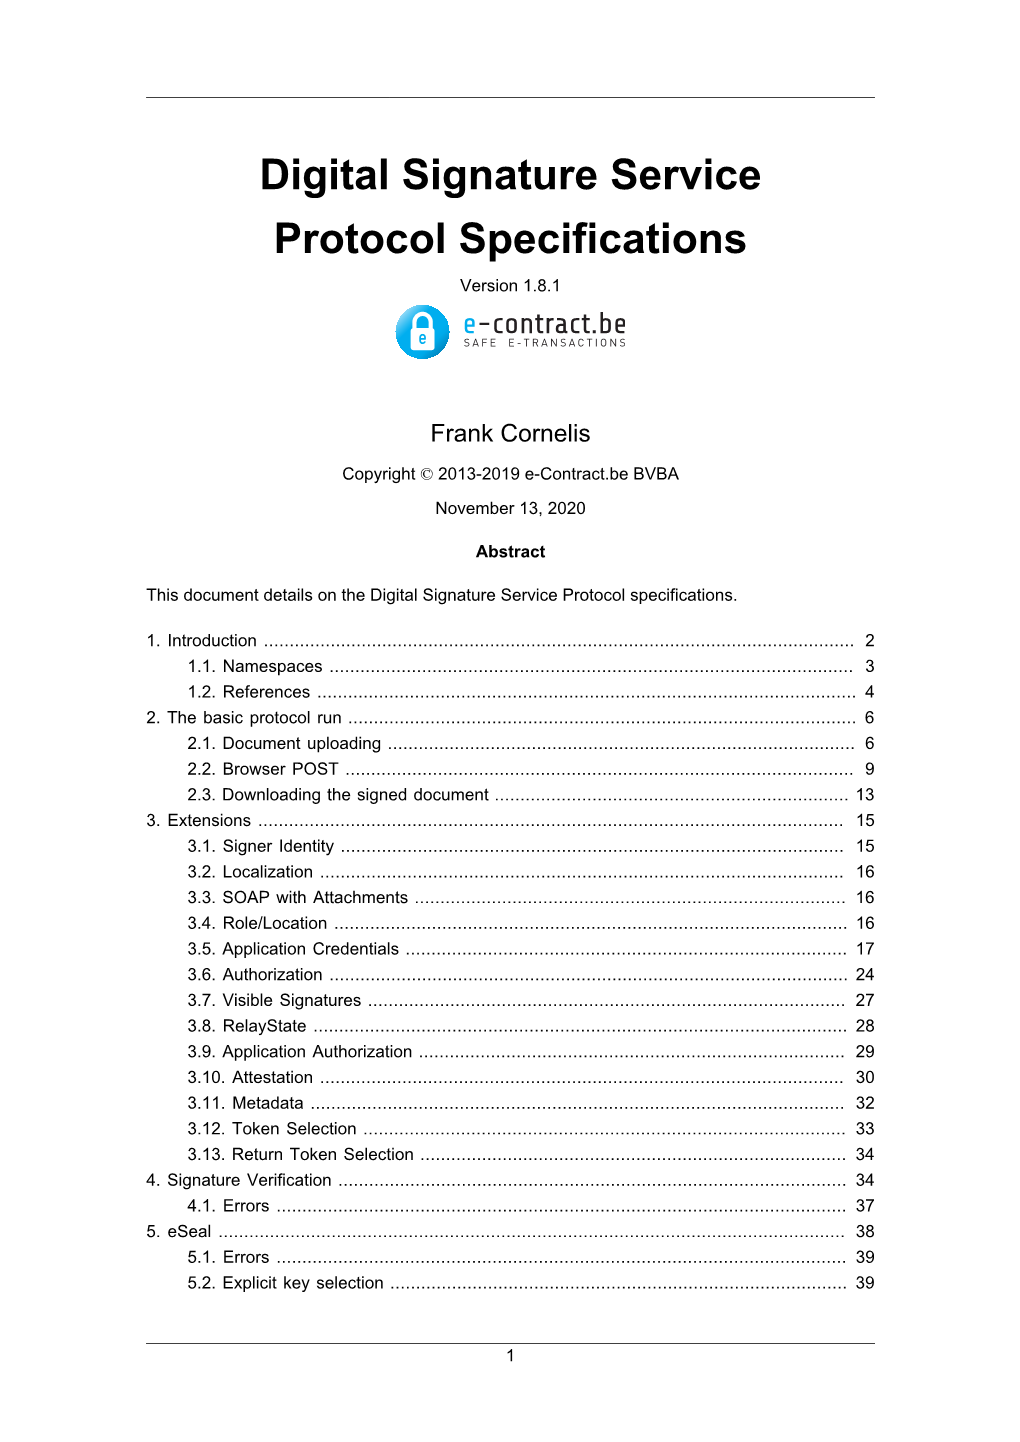 Digital Signature Service Protocol Specifications 1.8.1